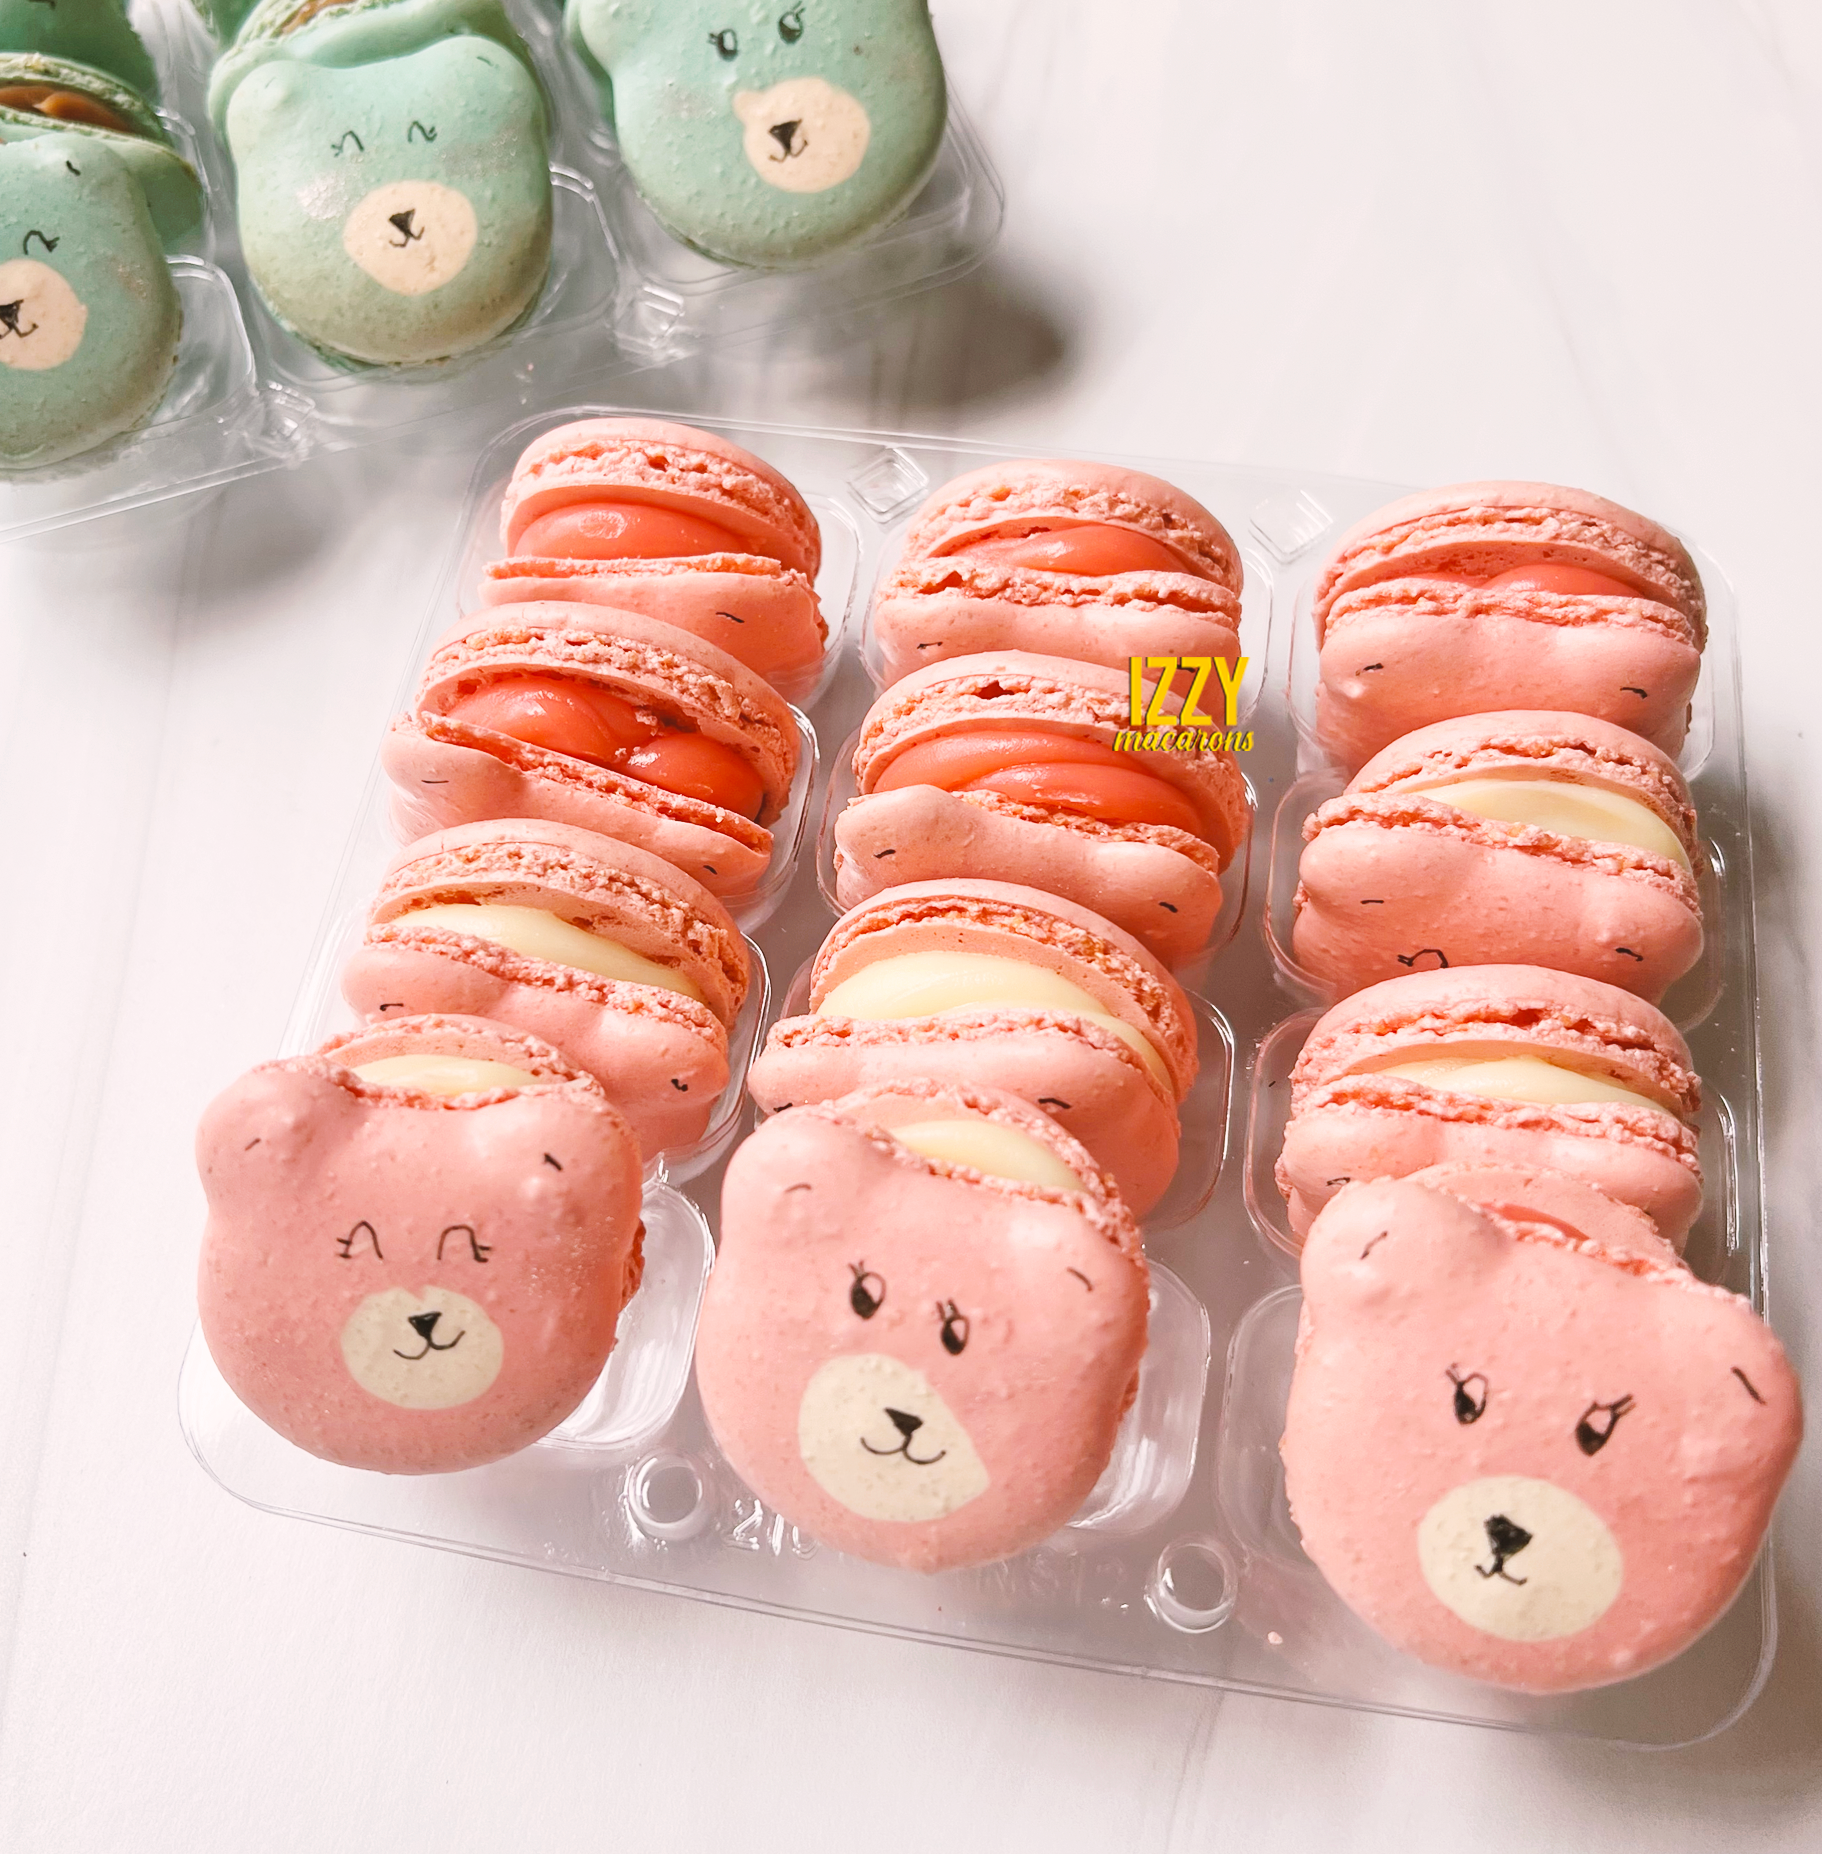 Pink and Blue Teddy Bears Macarons - Izzy Macarons